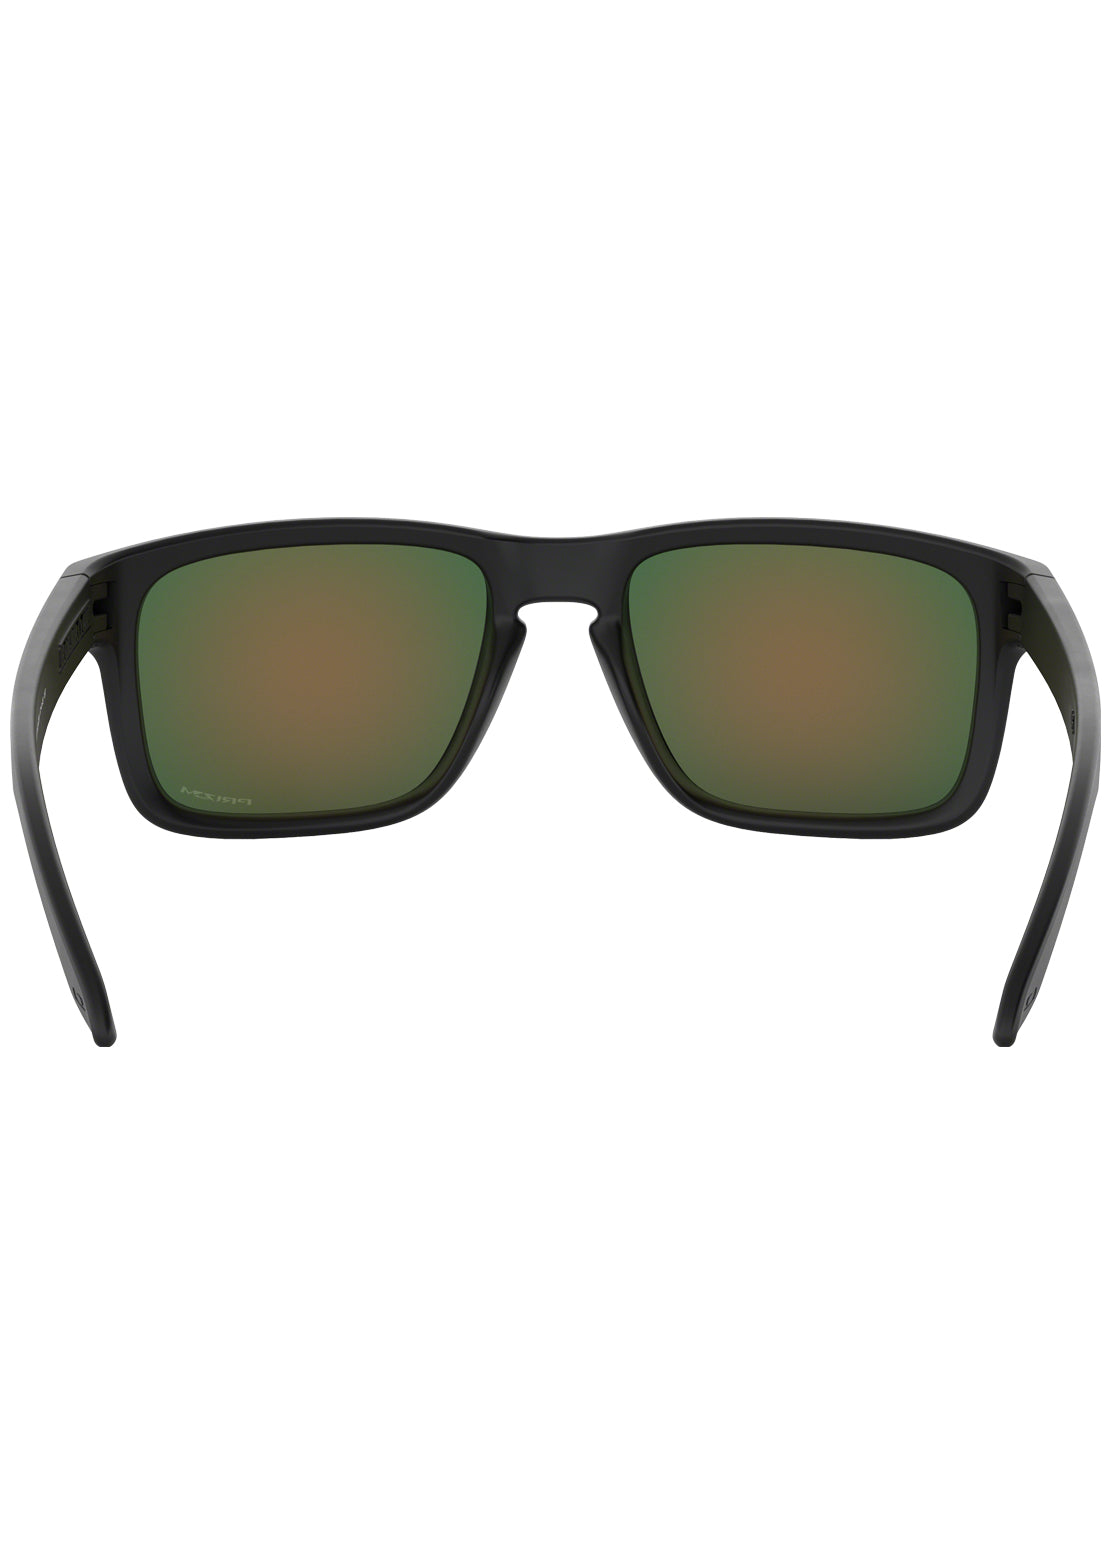 Oakley Men’s Holbrook Sunglasses Matte Black/Prizm Ruby